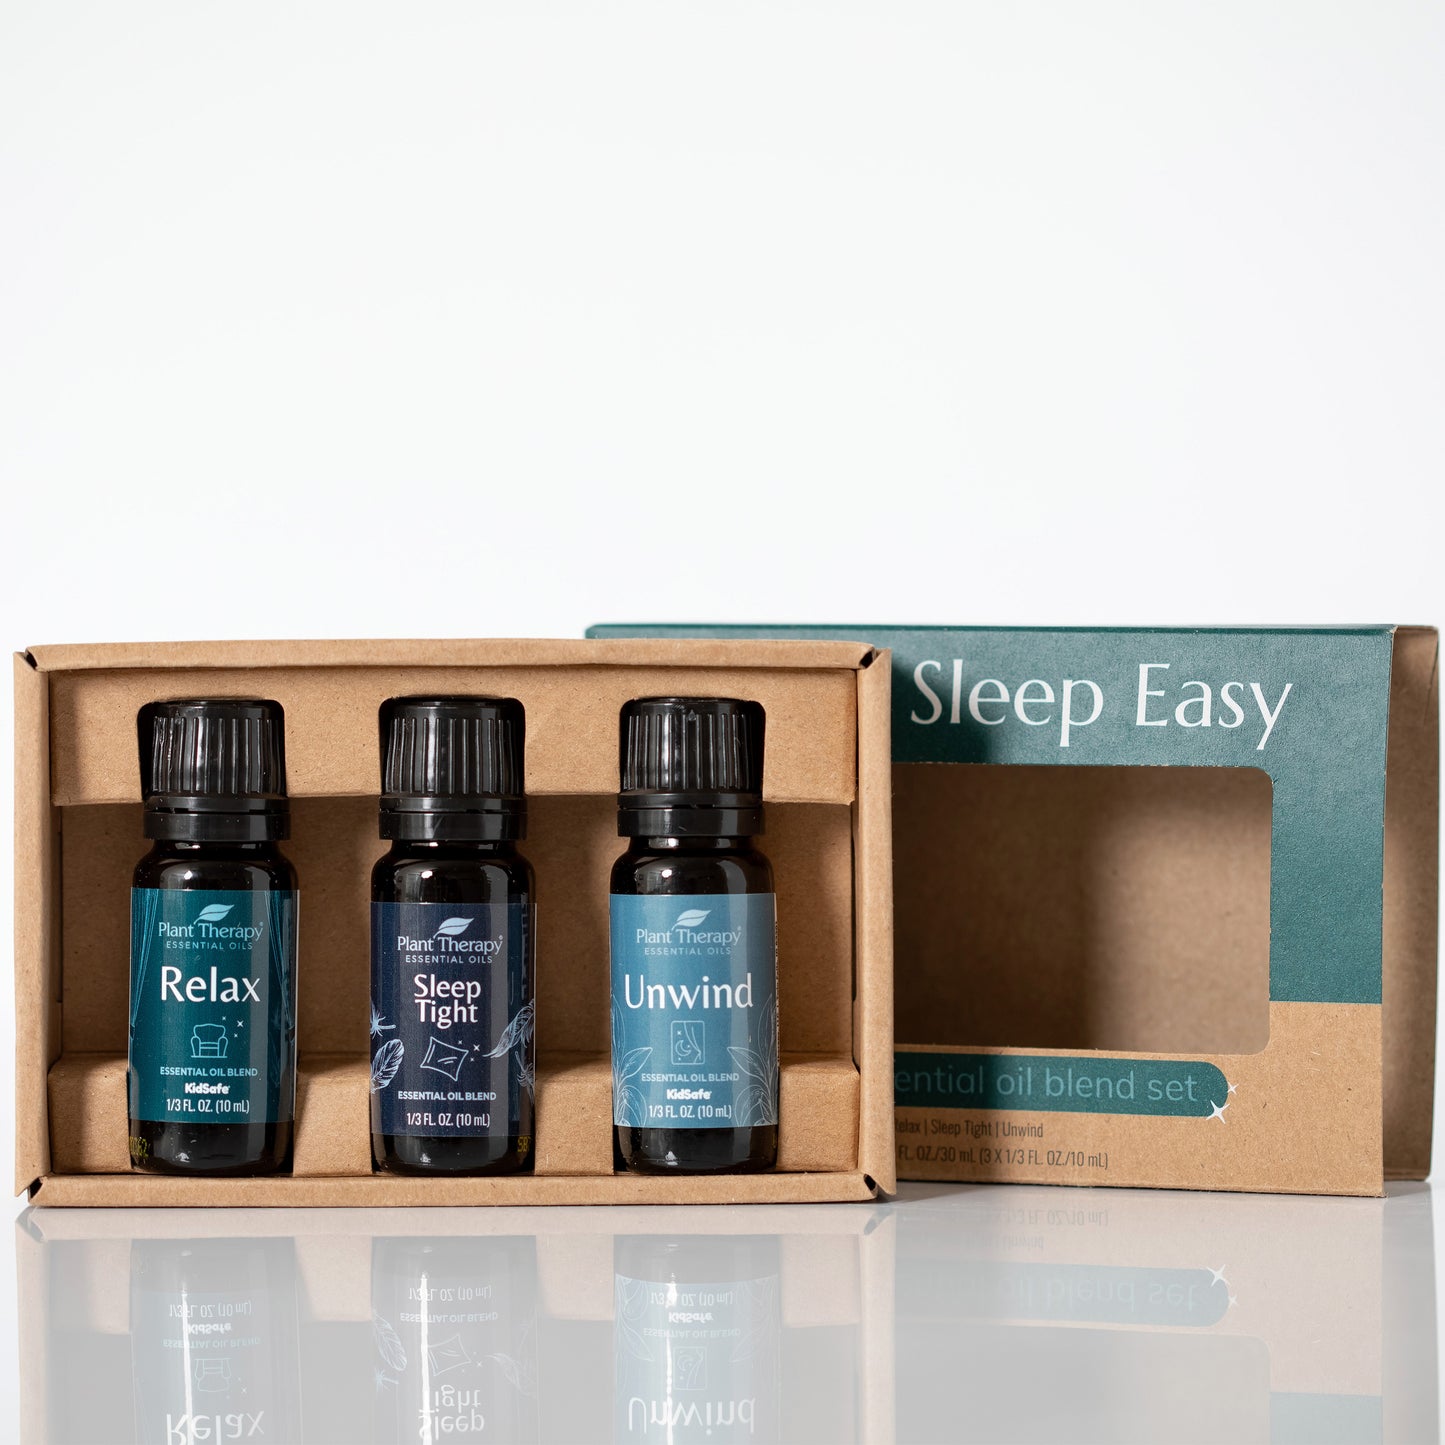 Sleep Easy Essential Oil Blend Set, image of blend bottles